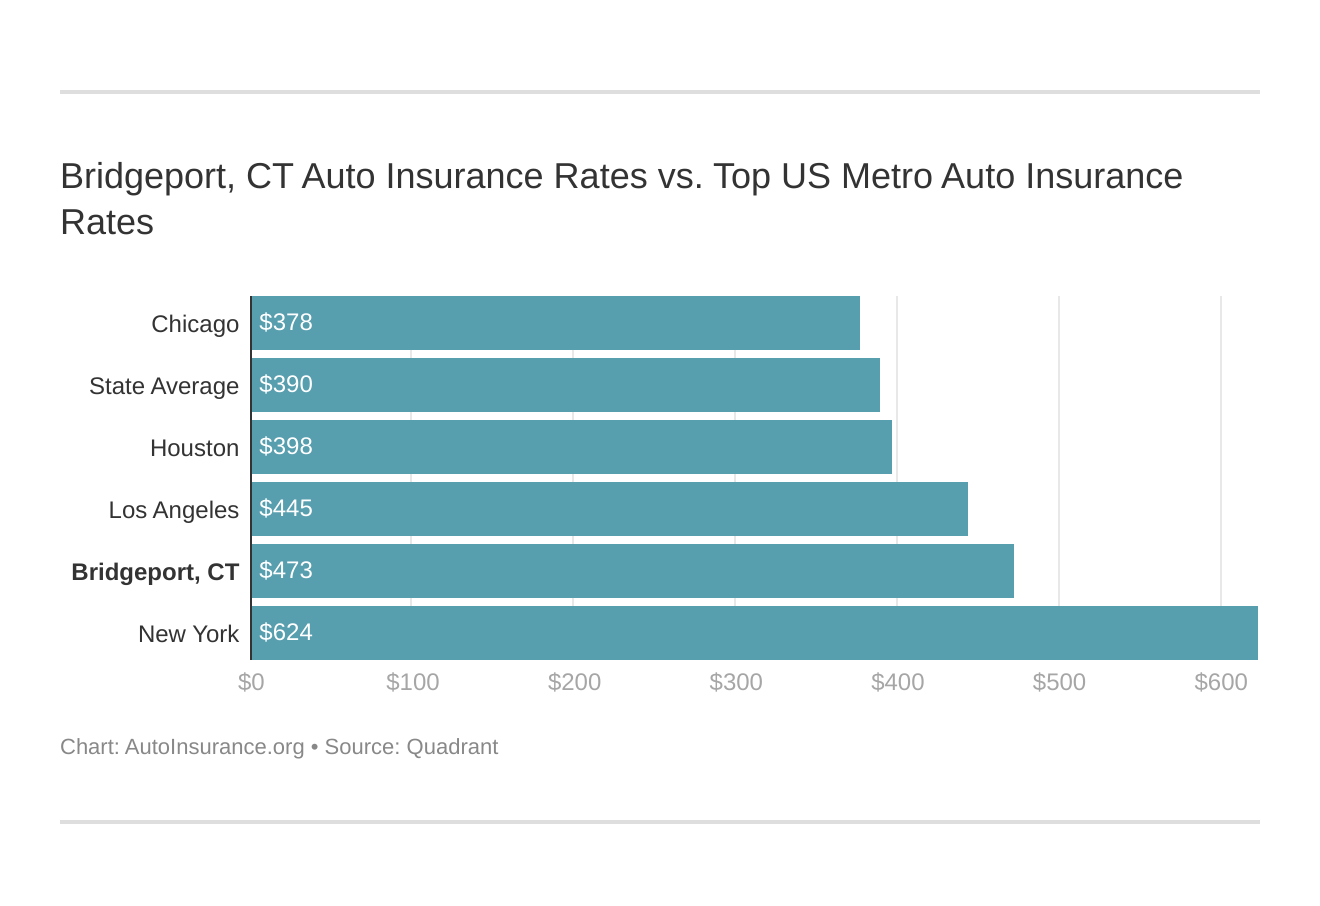 Bridgeport, CT Auto Insurance Rates vs. Top US Metro Auto Insurance Rates